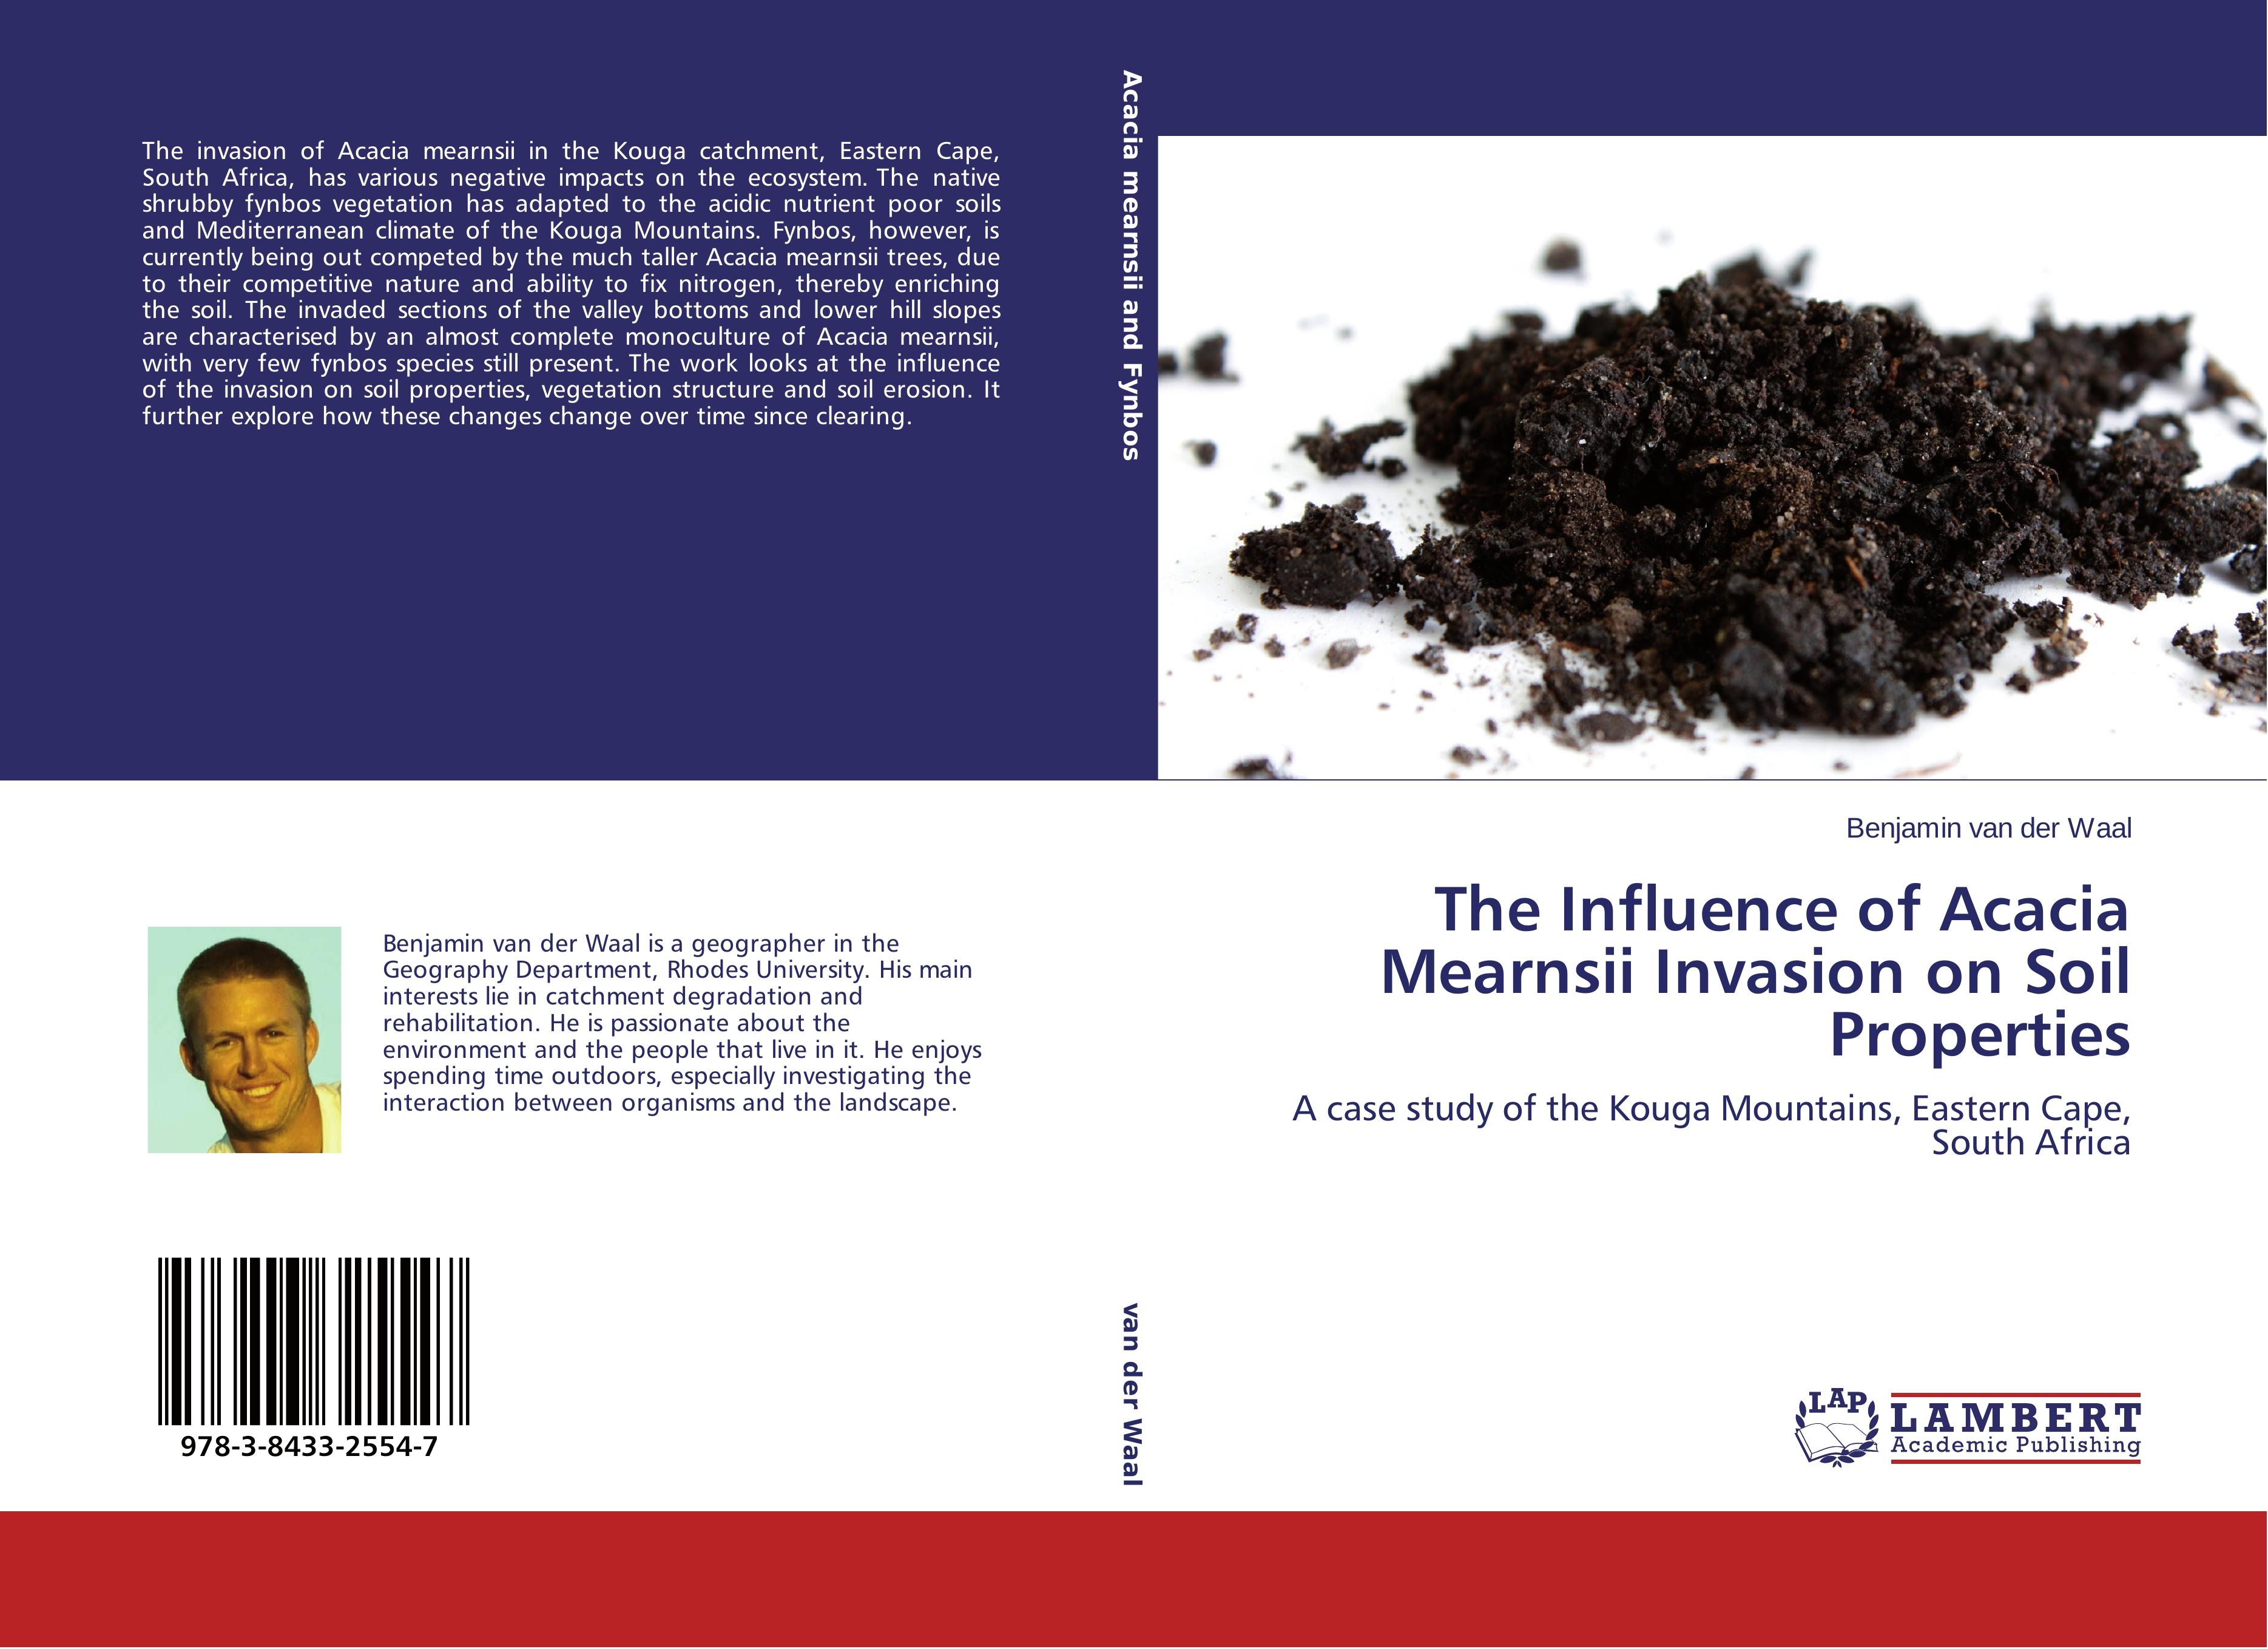 The Influence of Acacia Mearnsii Invasion on Soil Properties - Benjamin van der Waal